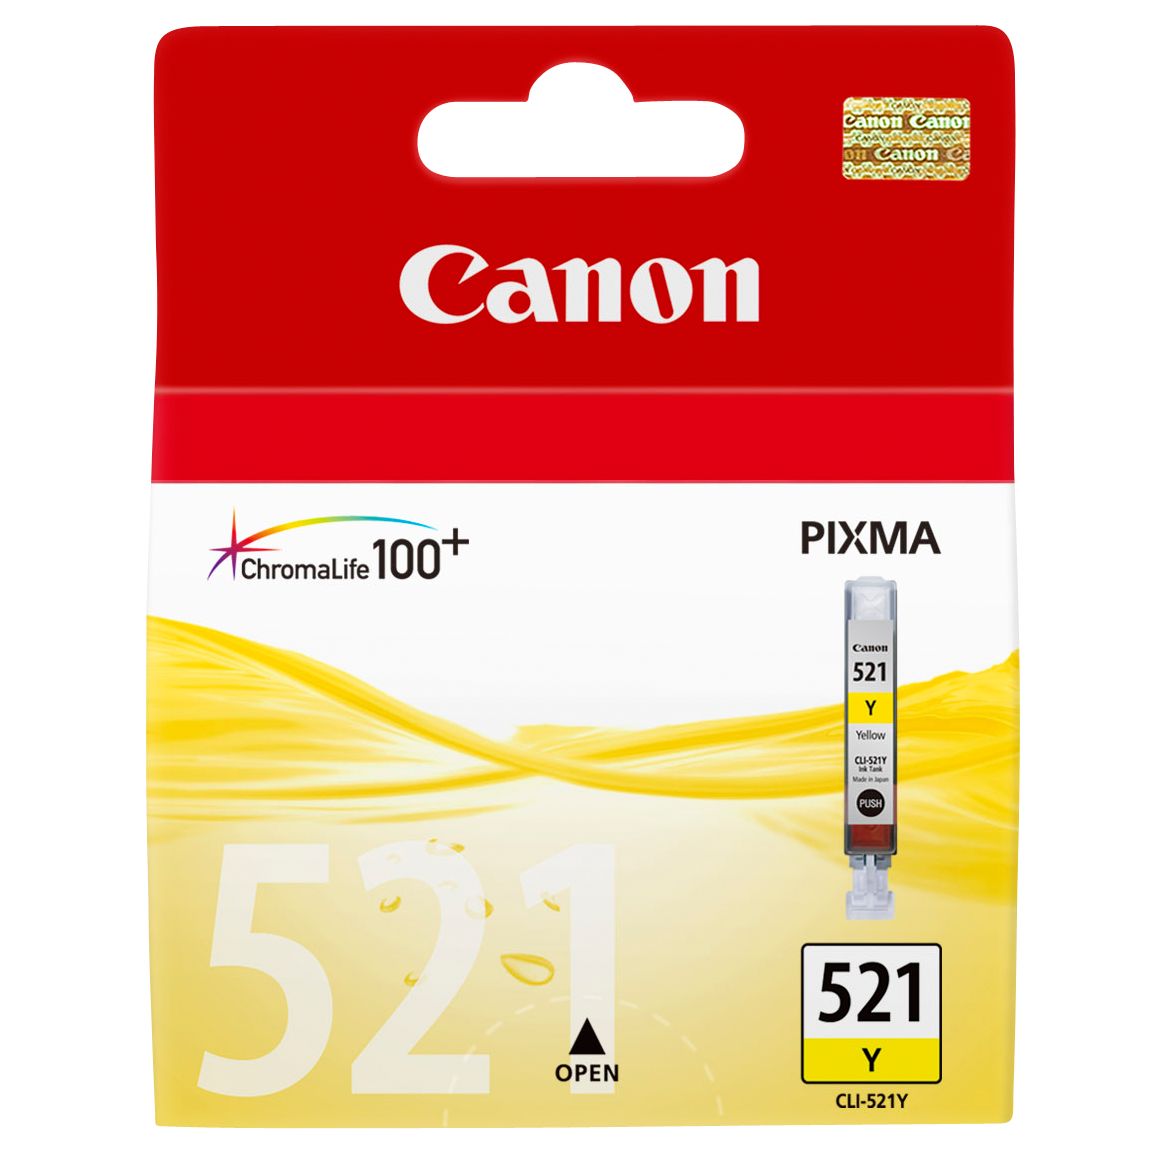 Pixma Inkjet Cartridge, Yellow, CLI-521